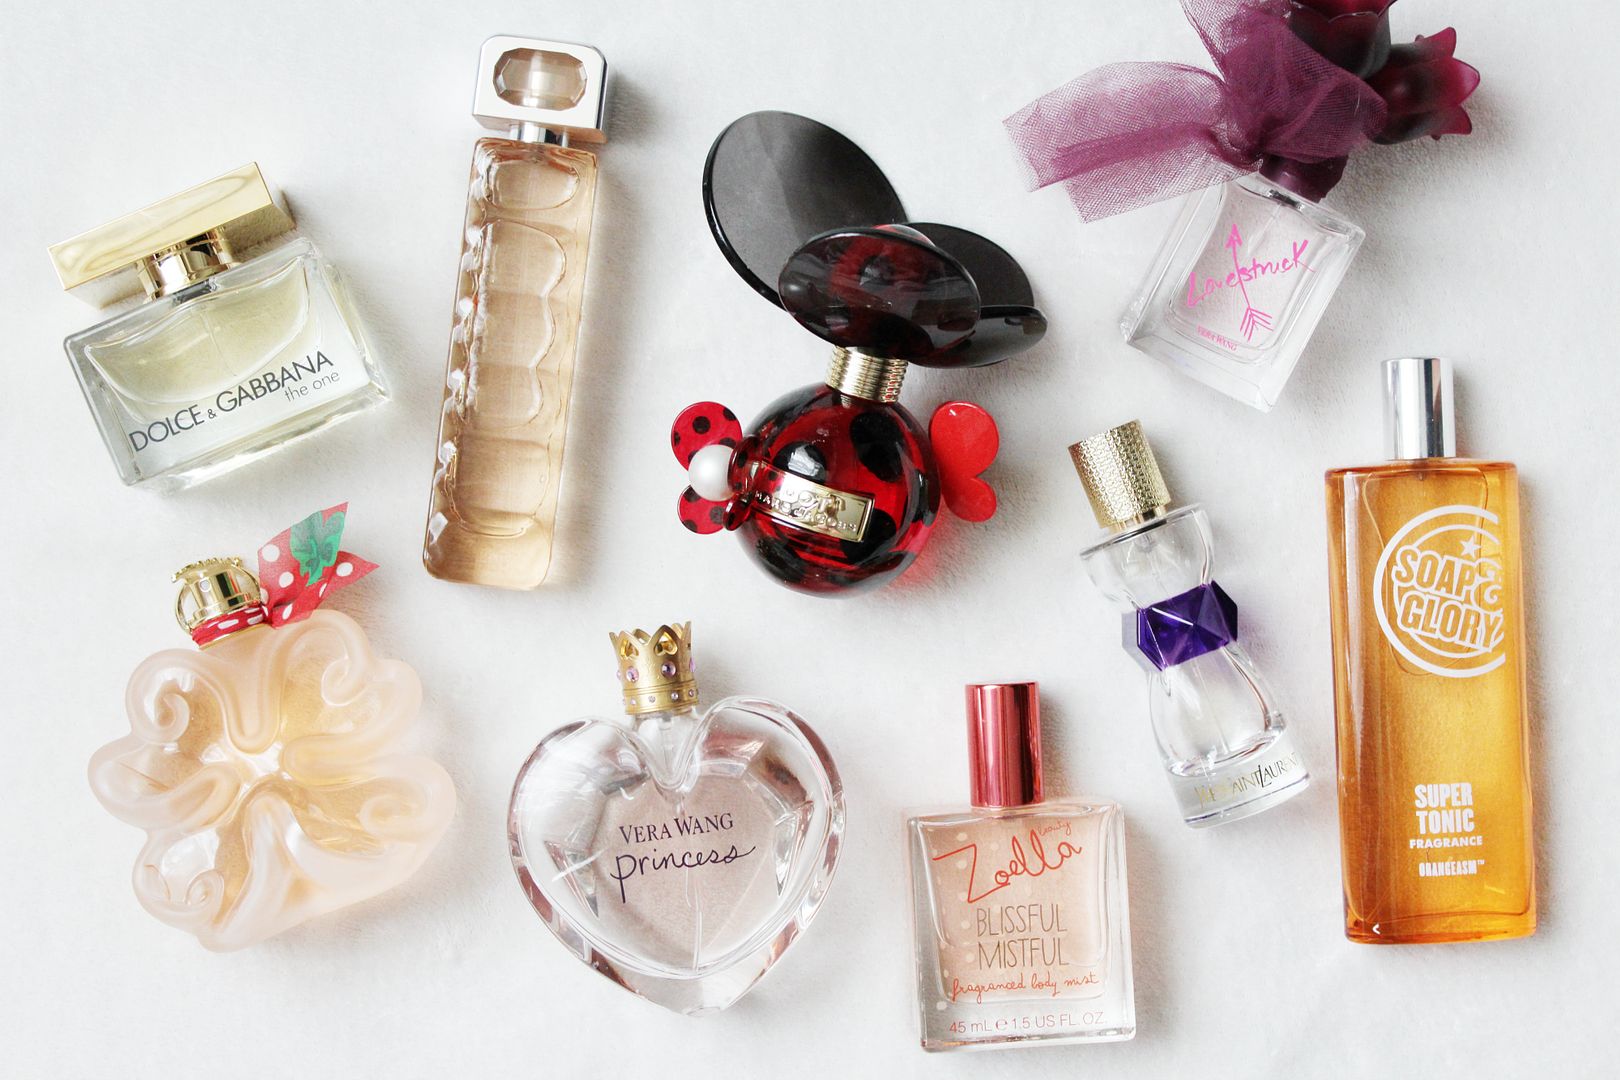 My-Perfume-Body-Mist-Collection-2015-Dolce-Gabbana-Lolita-Lempicka-Hugo-Boss-Marc-Jacobs-Yves-Saint-Laurent-YSL-Zoella-Vera-Wang-Soap-And-Glory-Belle-Amie-UK-Beauty-Fashion-Lifestyle-Blog